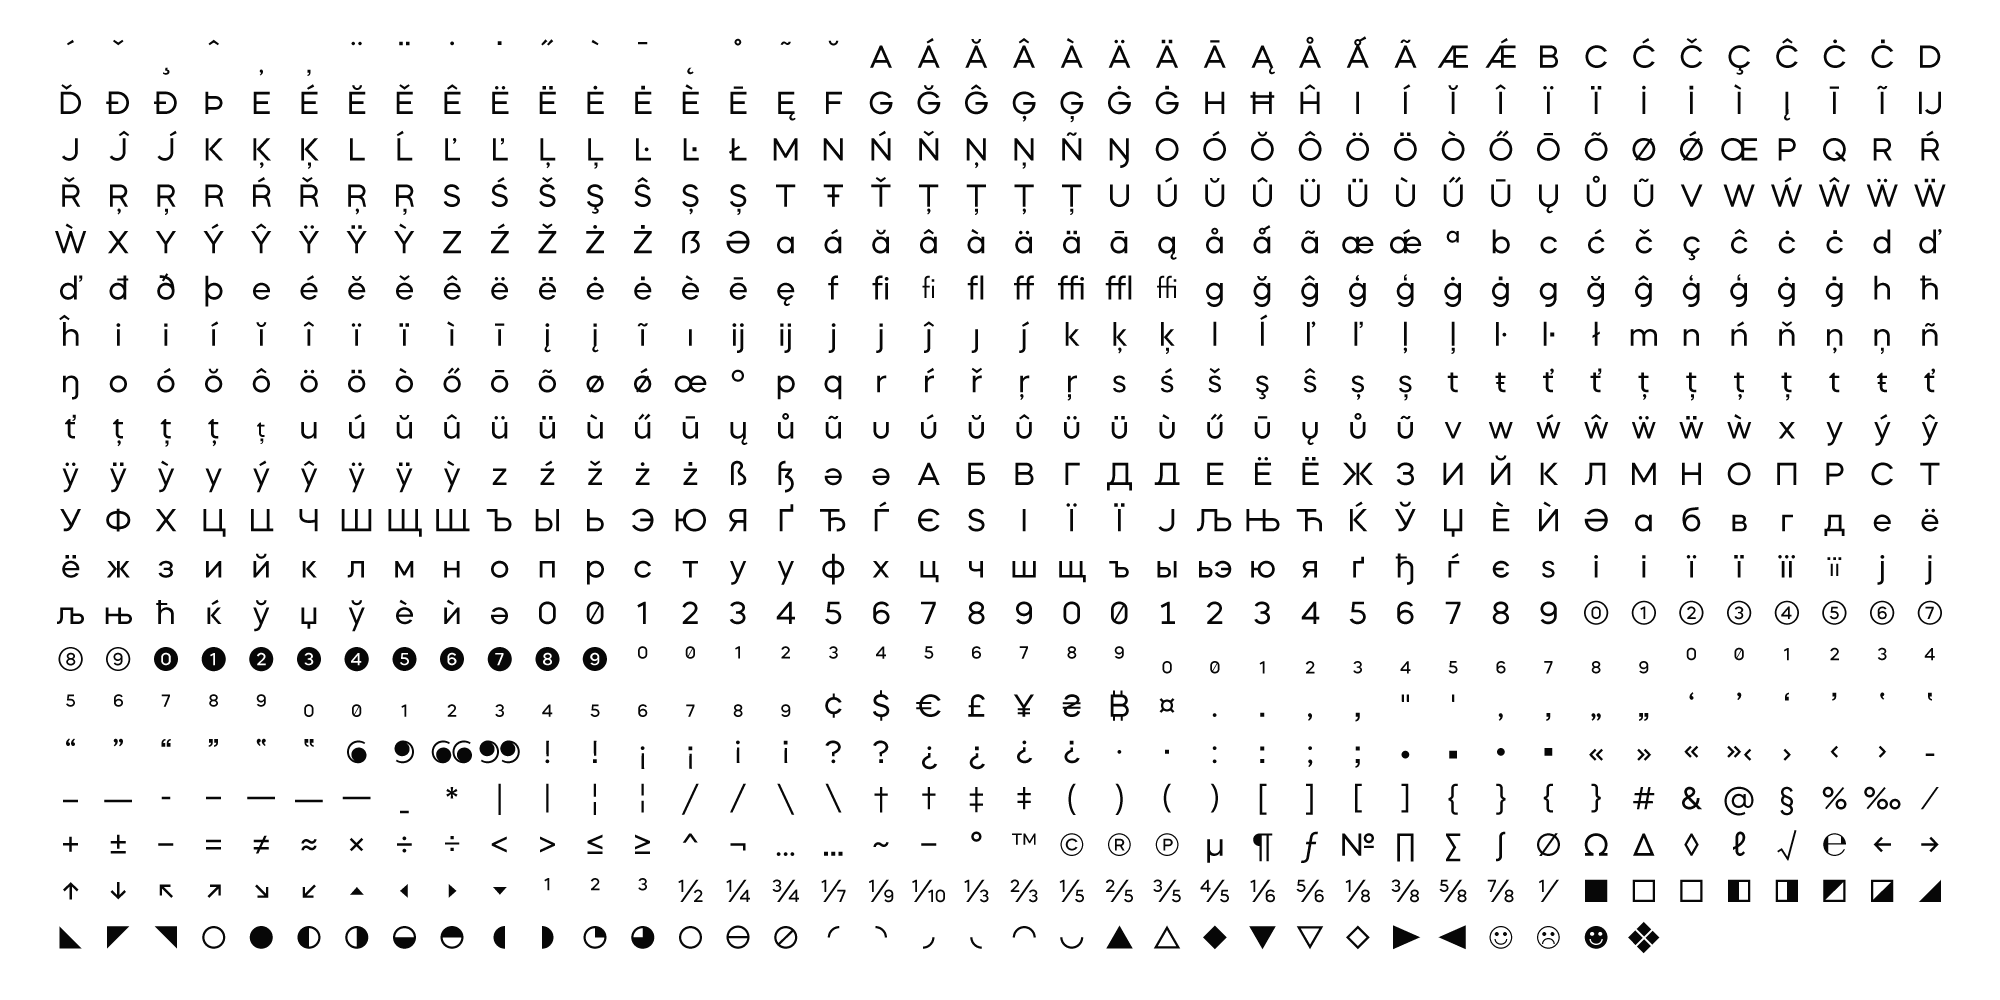 Mazzard Typeface